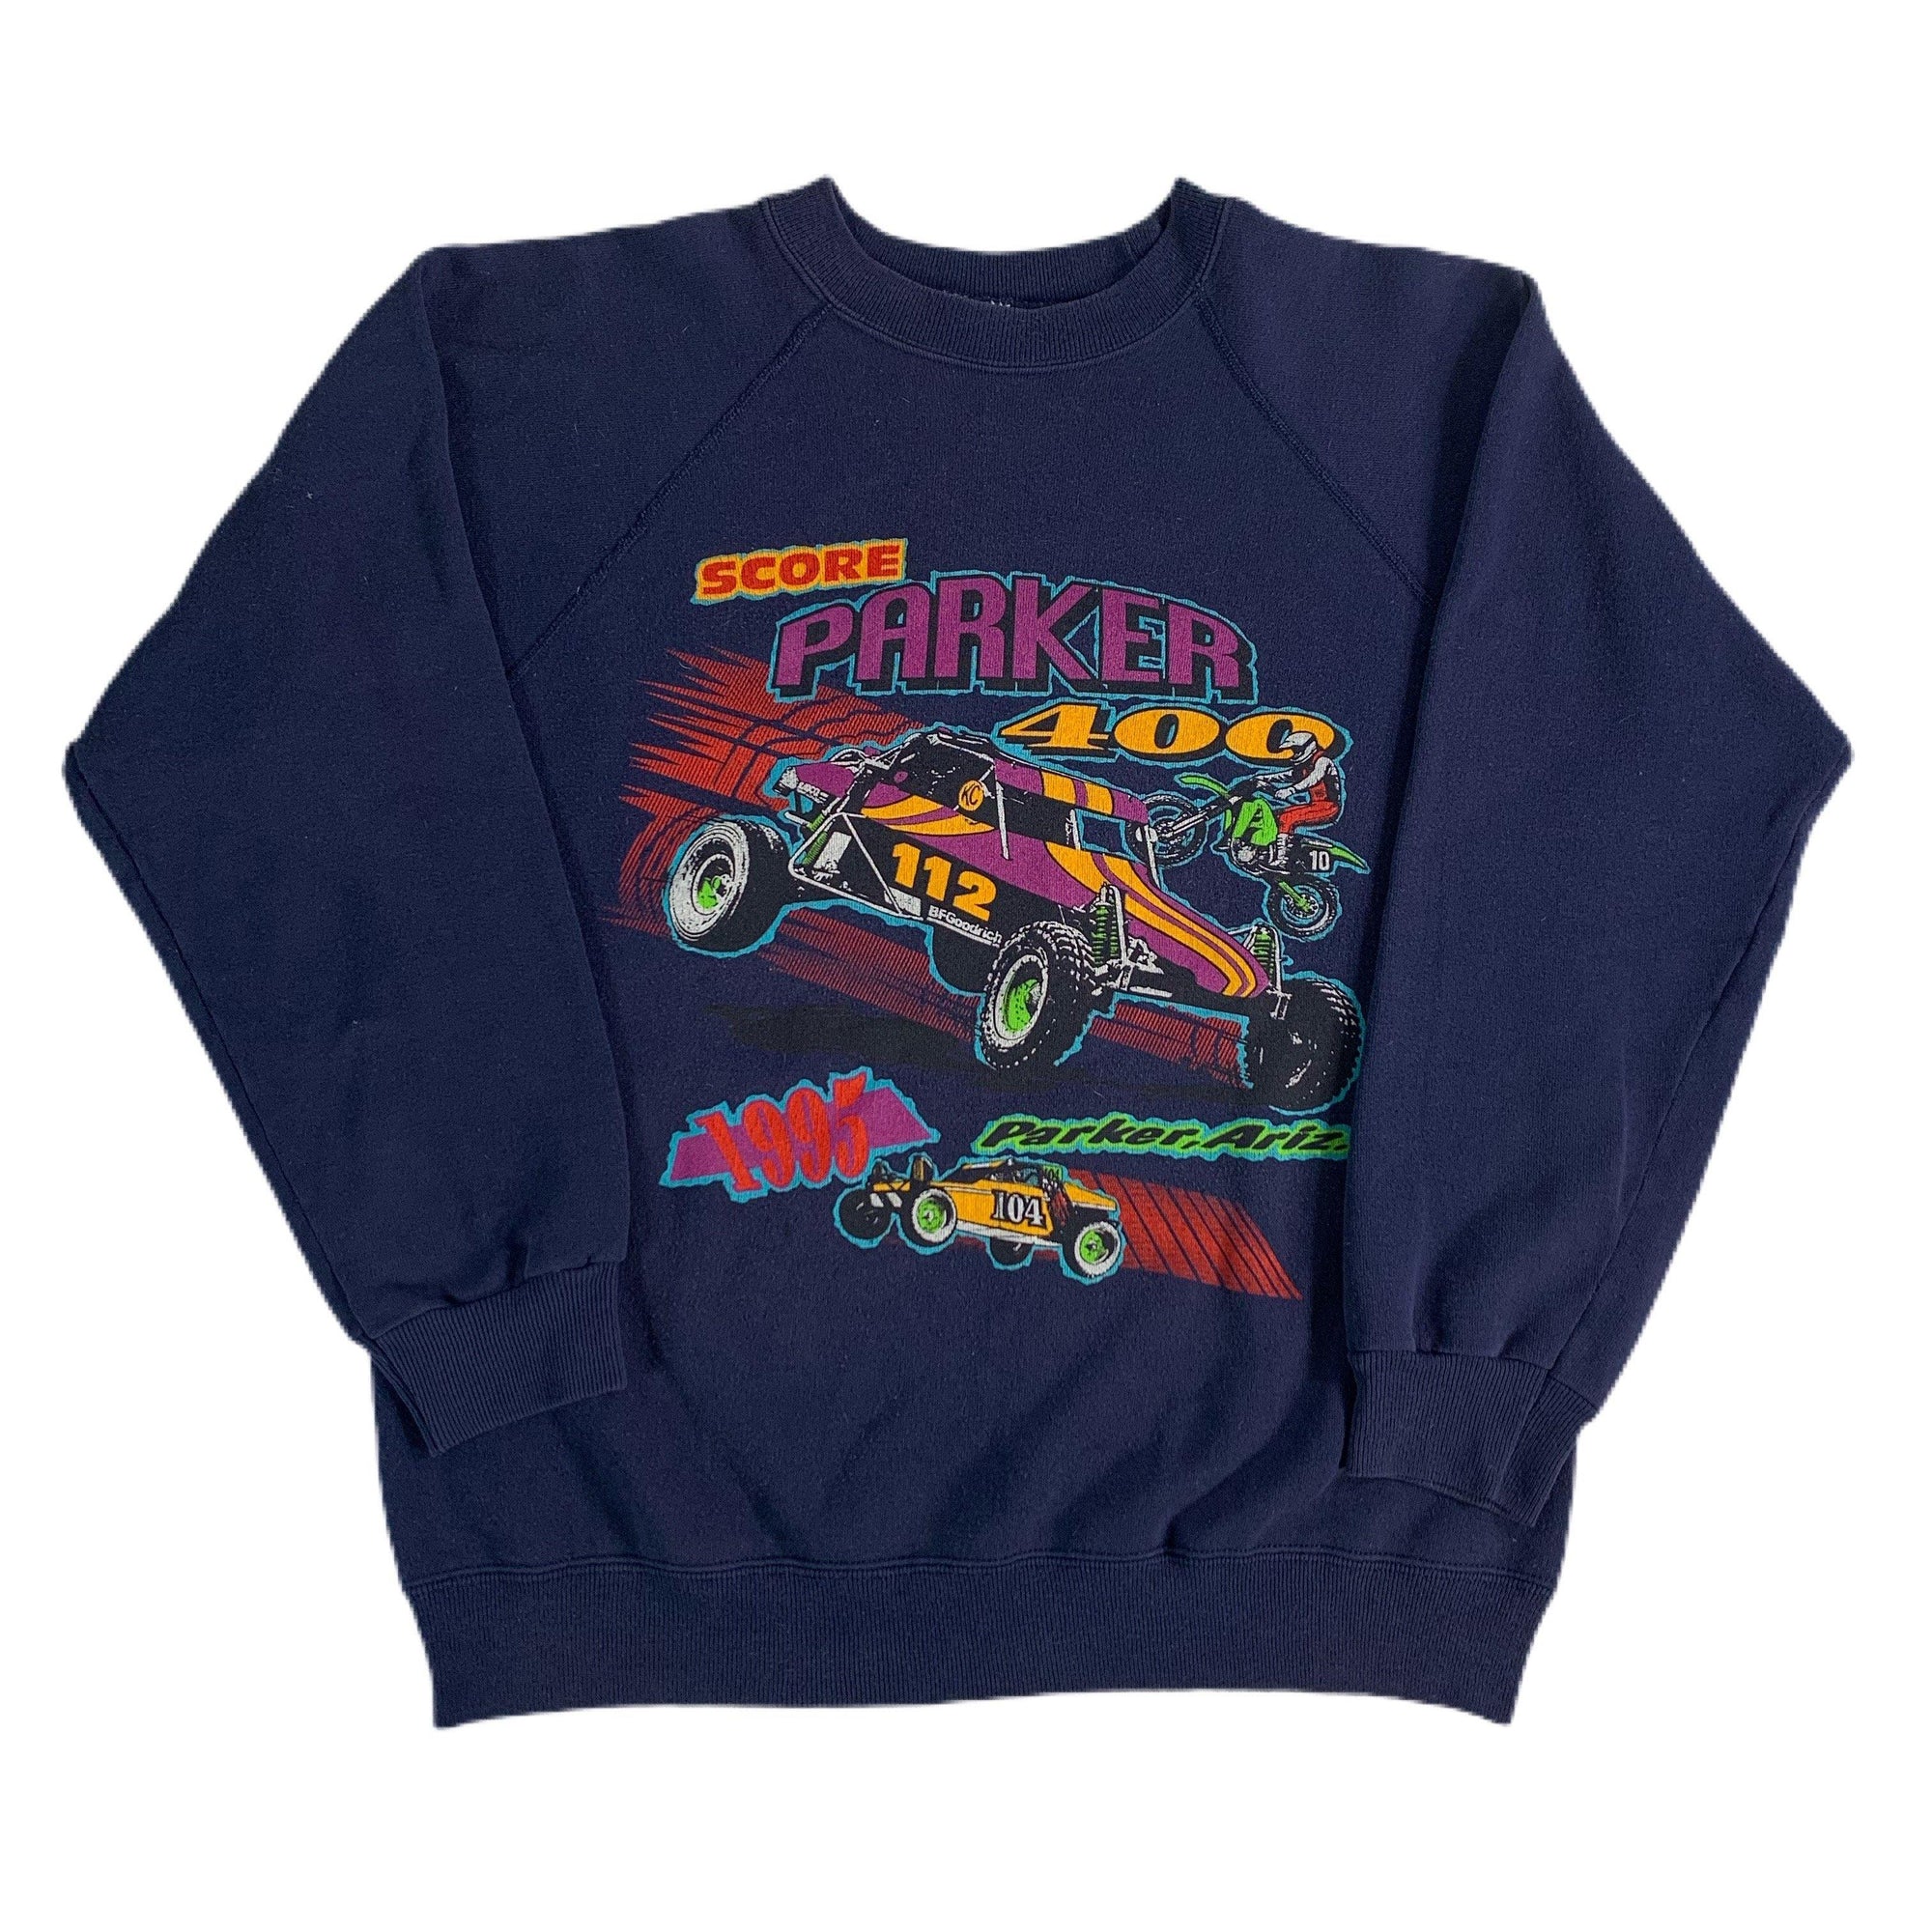 Vintage Score Parker 400 "1995" Crewneck Sweatshirt - jointcustodydc